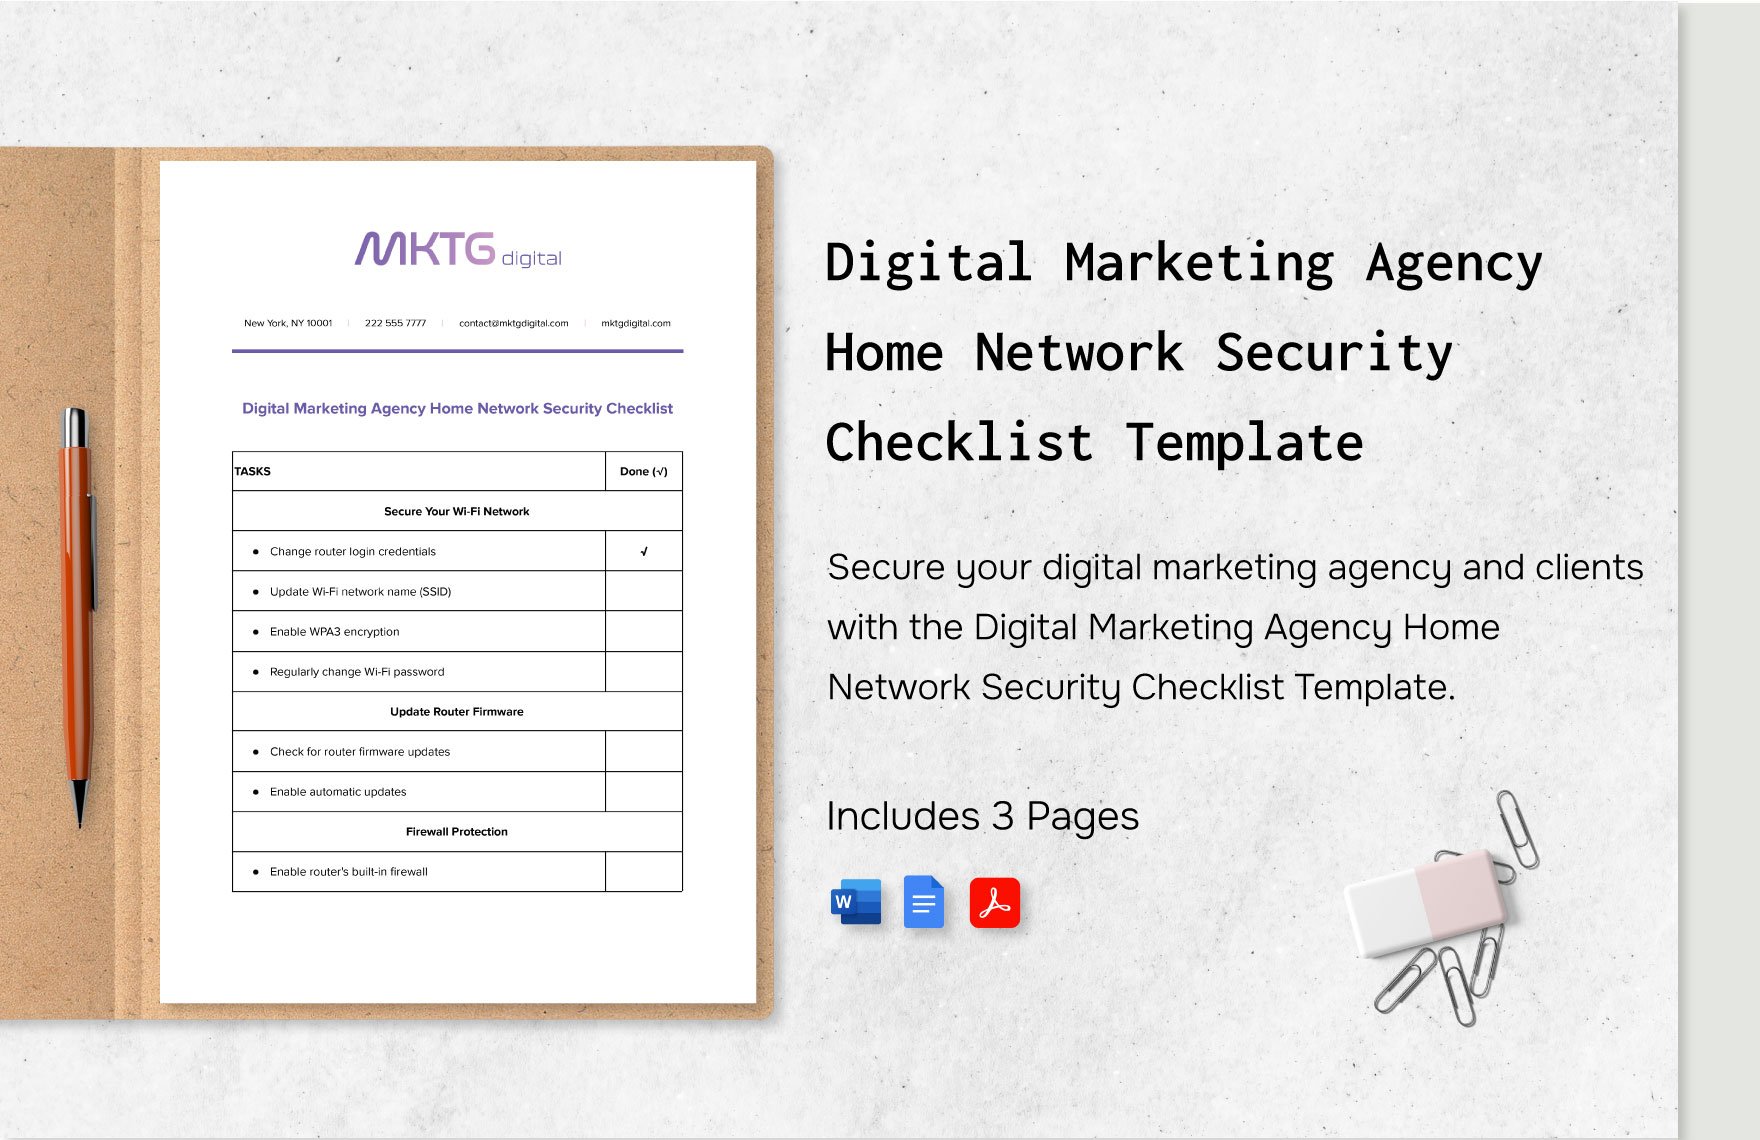 Digital Marketing Agency Home Network Security Checklist Template